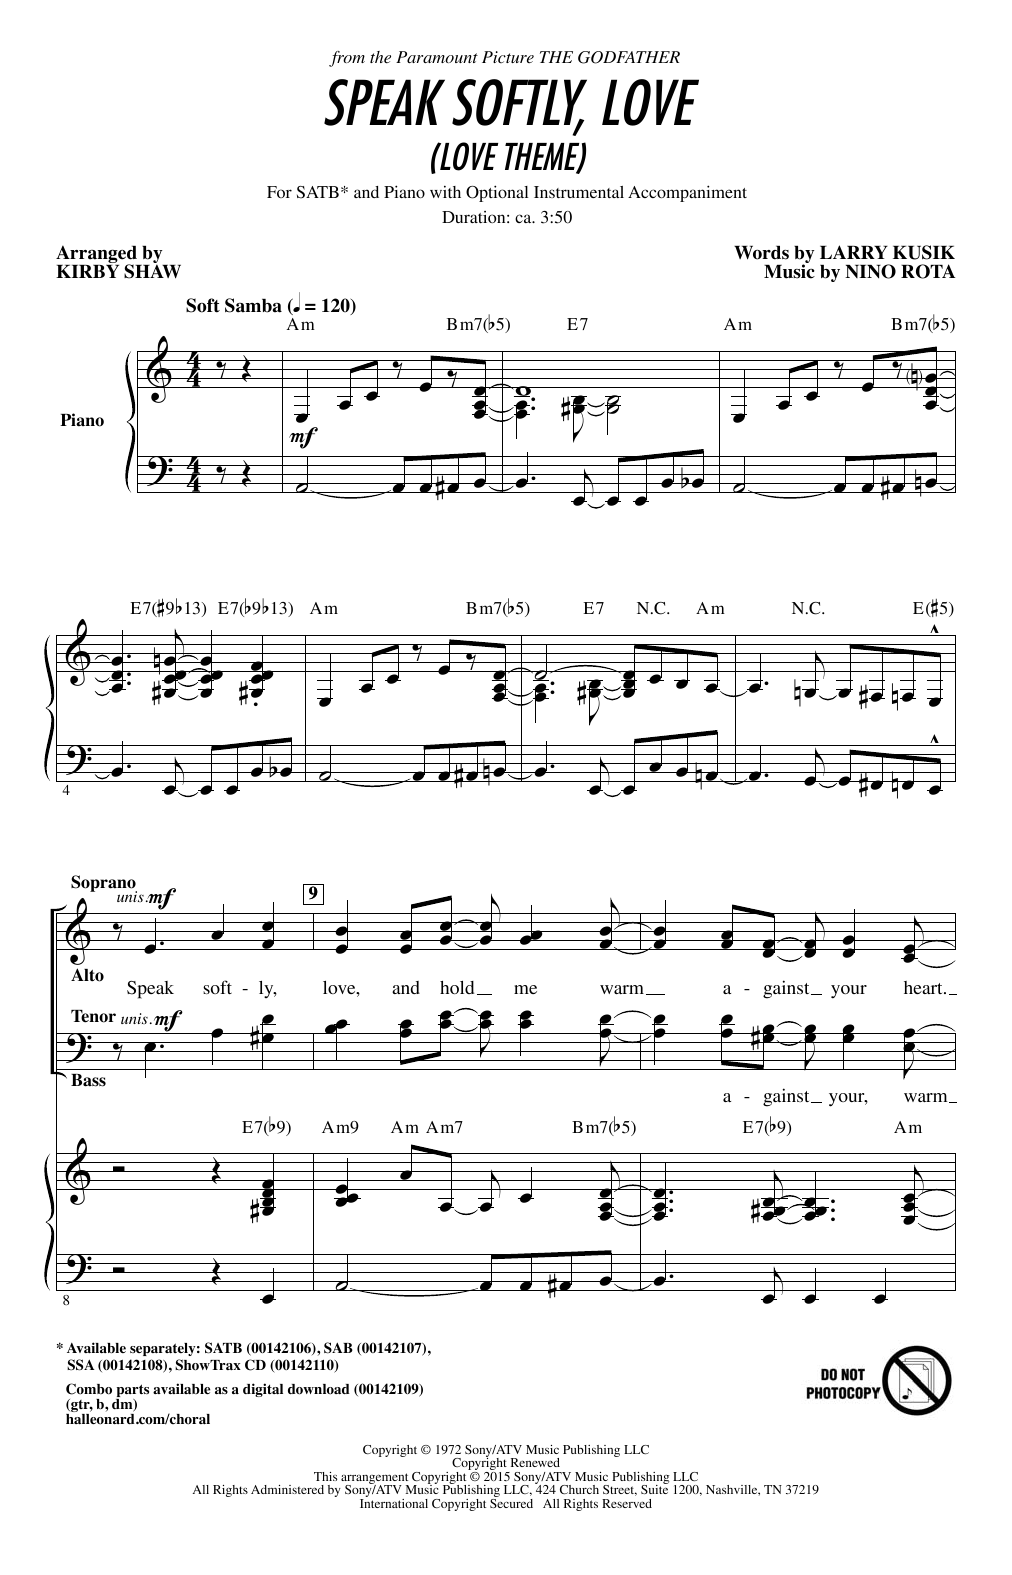 Nino Rota Speak Softly Love (Godfather Theme) (arr. Kirby Shaw) Sheet Music Notes & Chords for SAB - Download or Print PDF